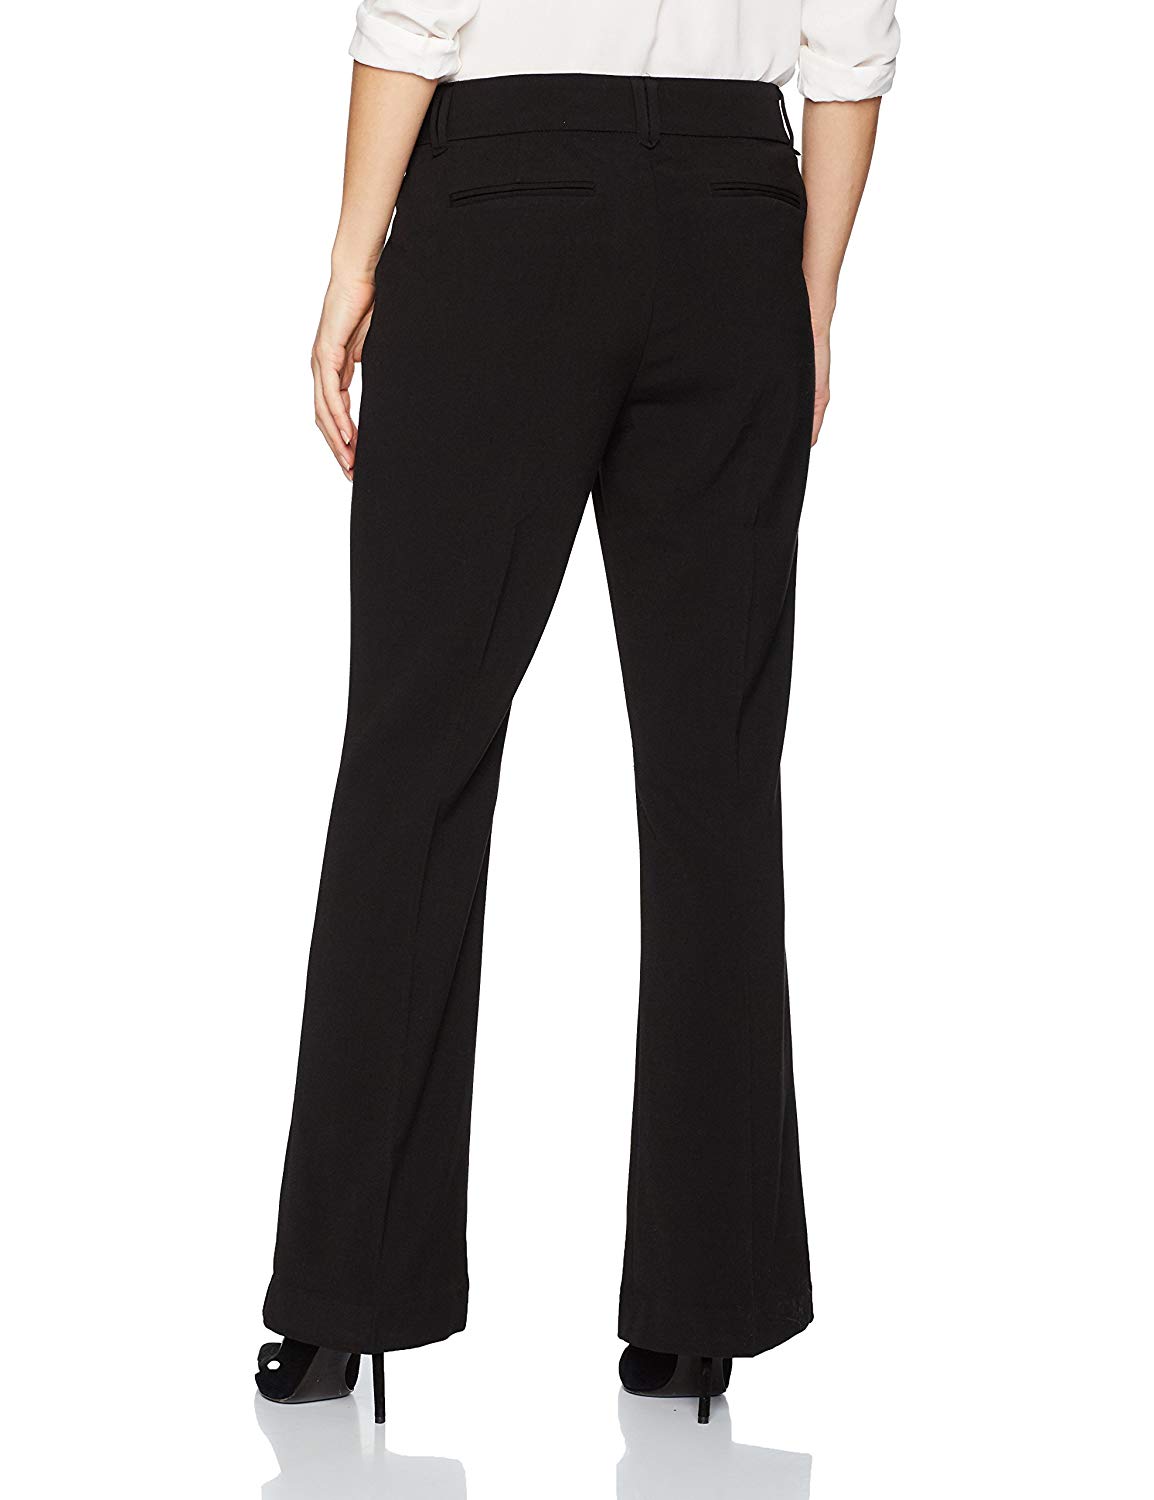 Briggs New York Women's Pants, Black, 8, Black, Size FpEw | eBay